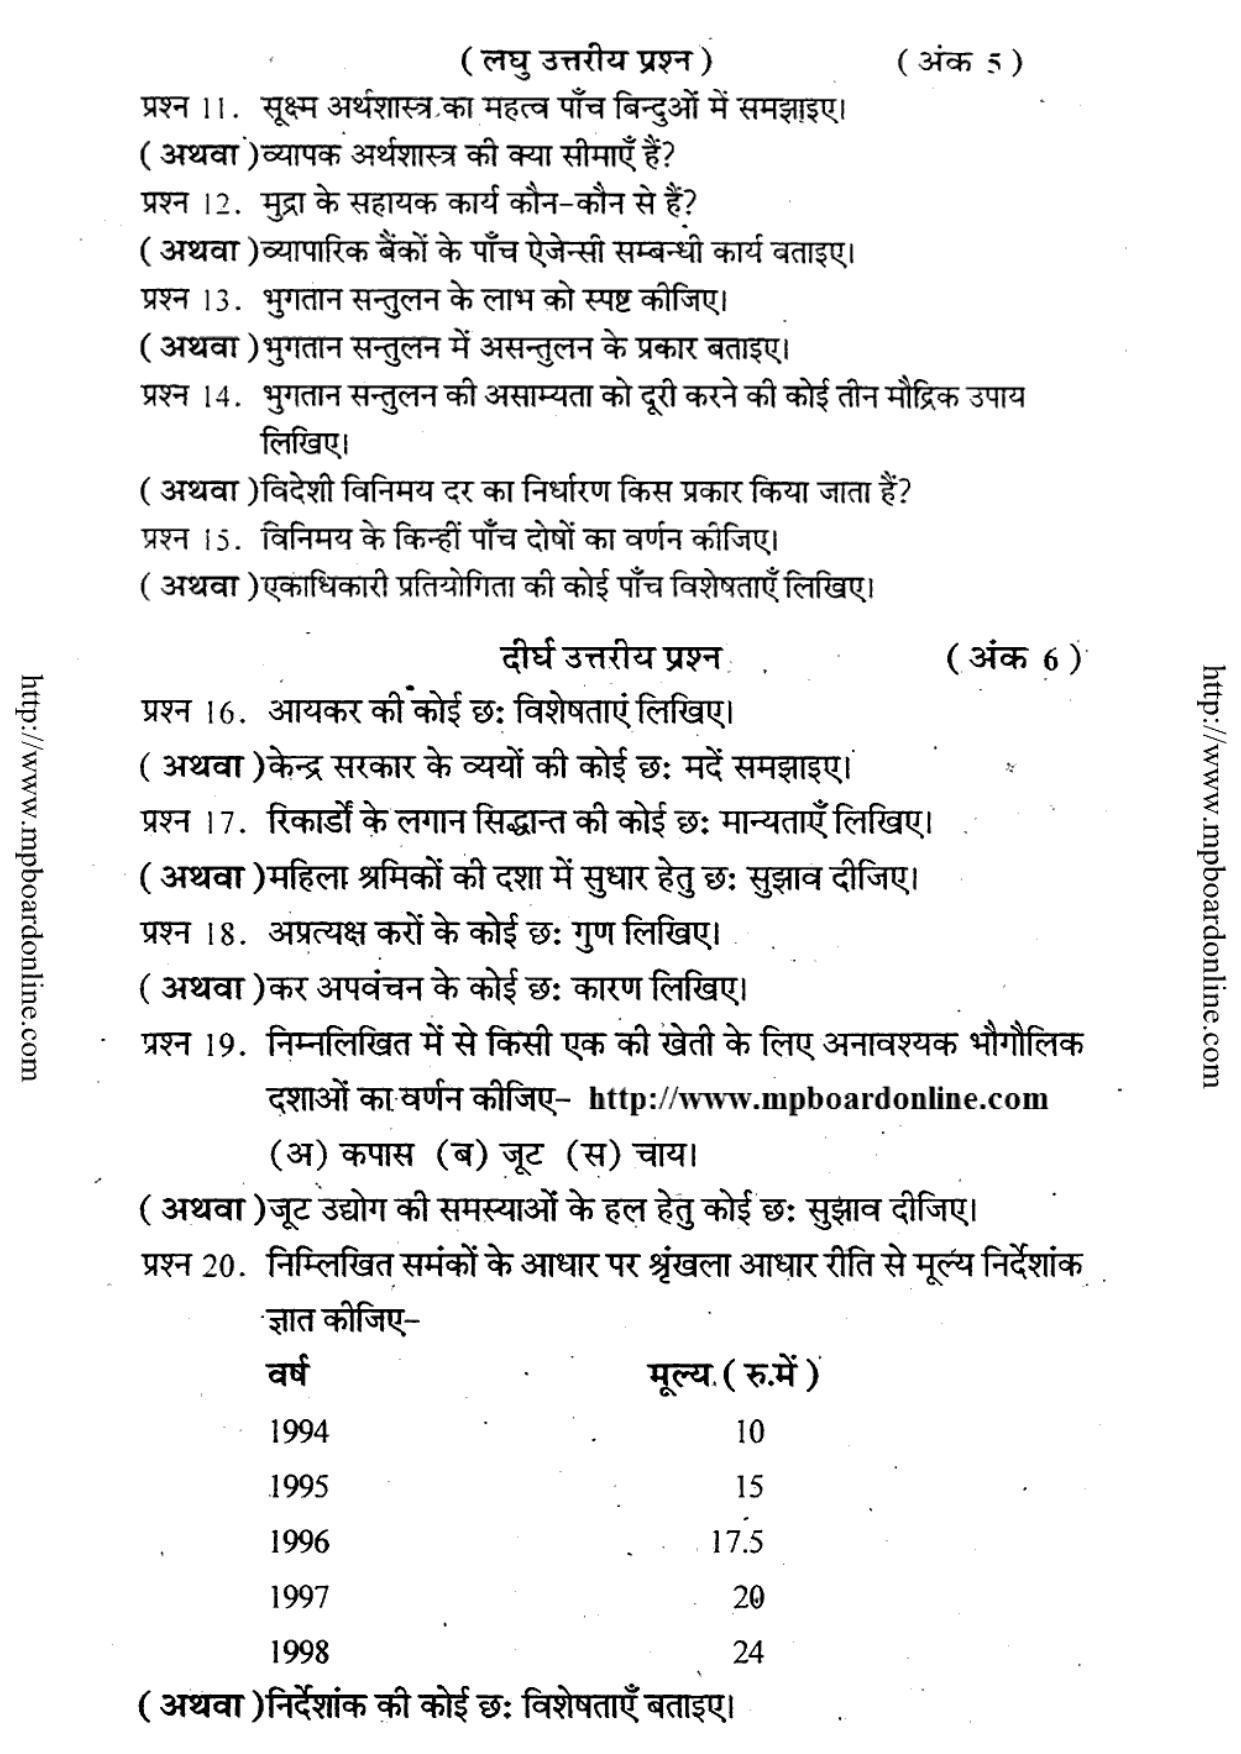 MP Board Class 12 Vyavsayik Arthshastra (Hindi Medium) 2010 Question Paper - Page 3